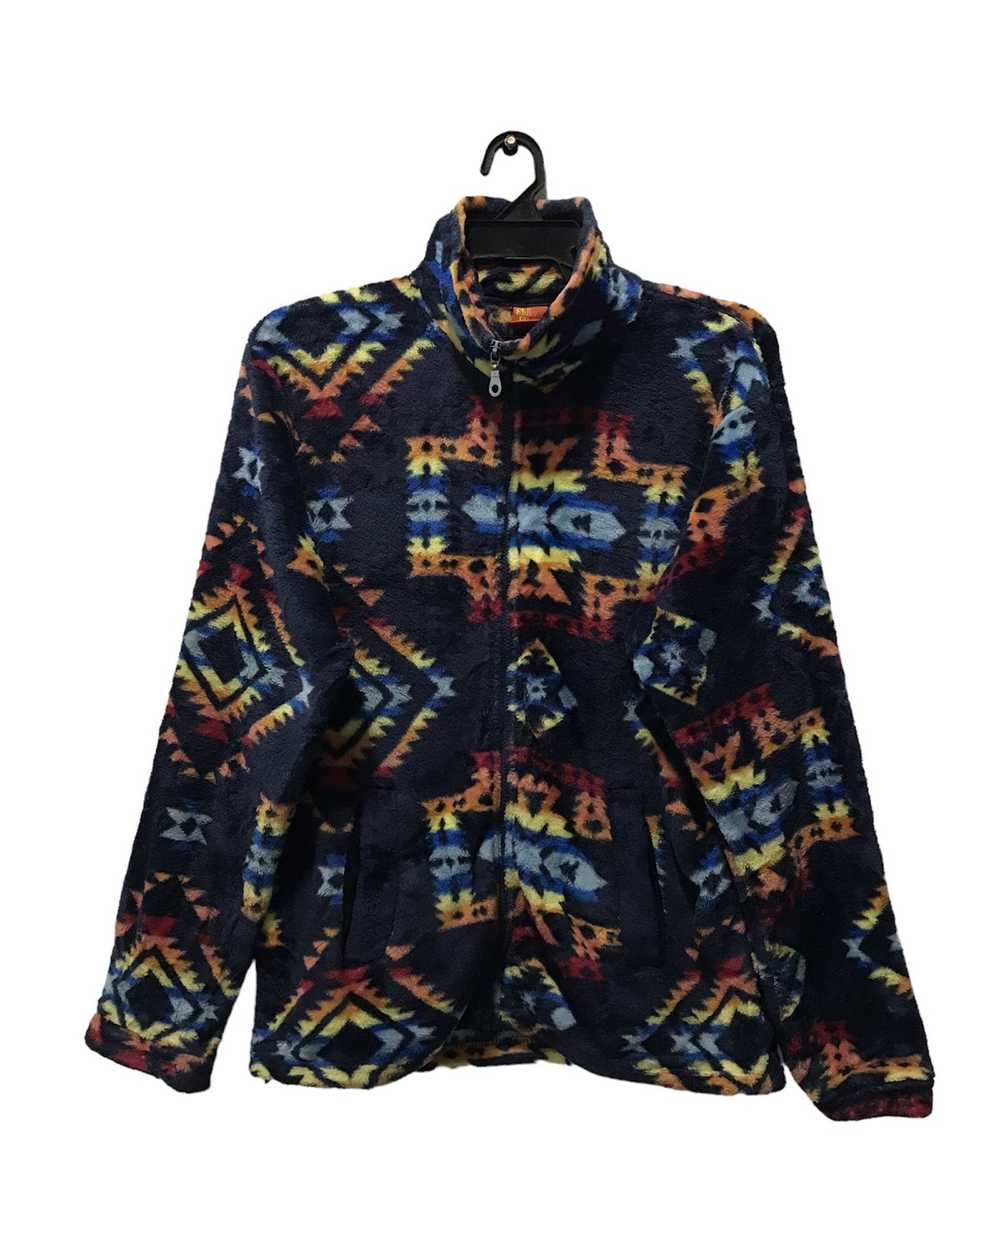 Japanese Brand Silky Fleece Jacket - image 1